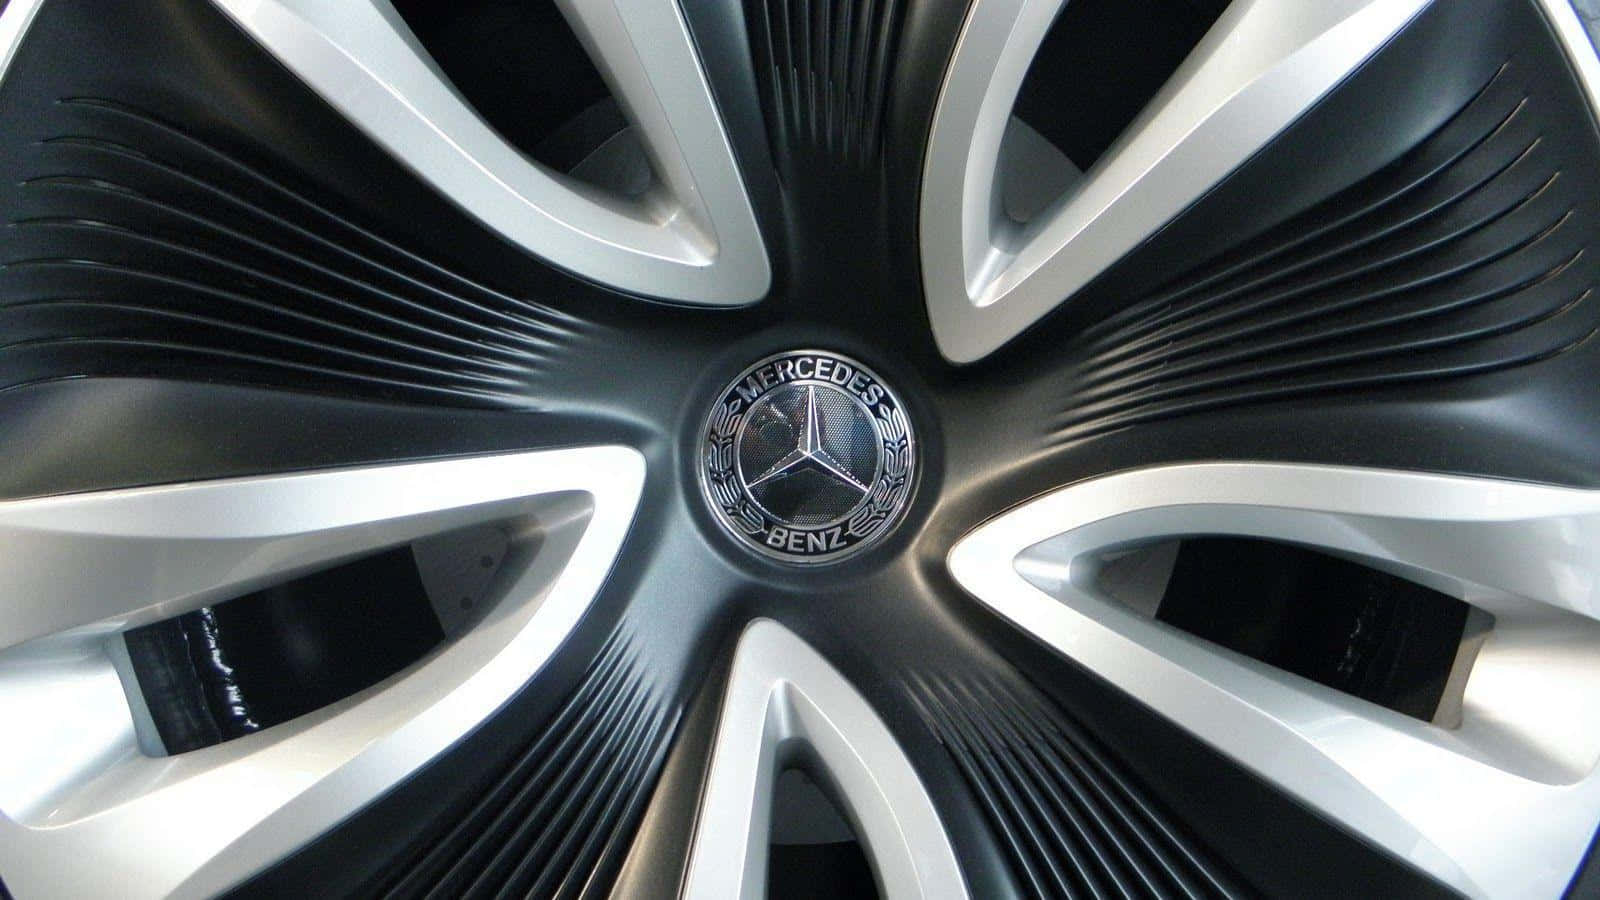 Mercedes Benz C Class Wheel Rims